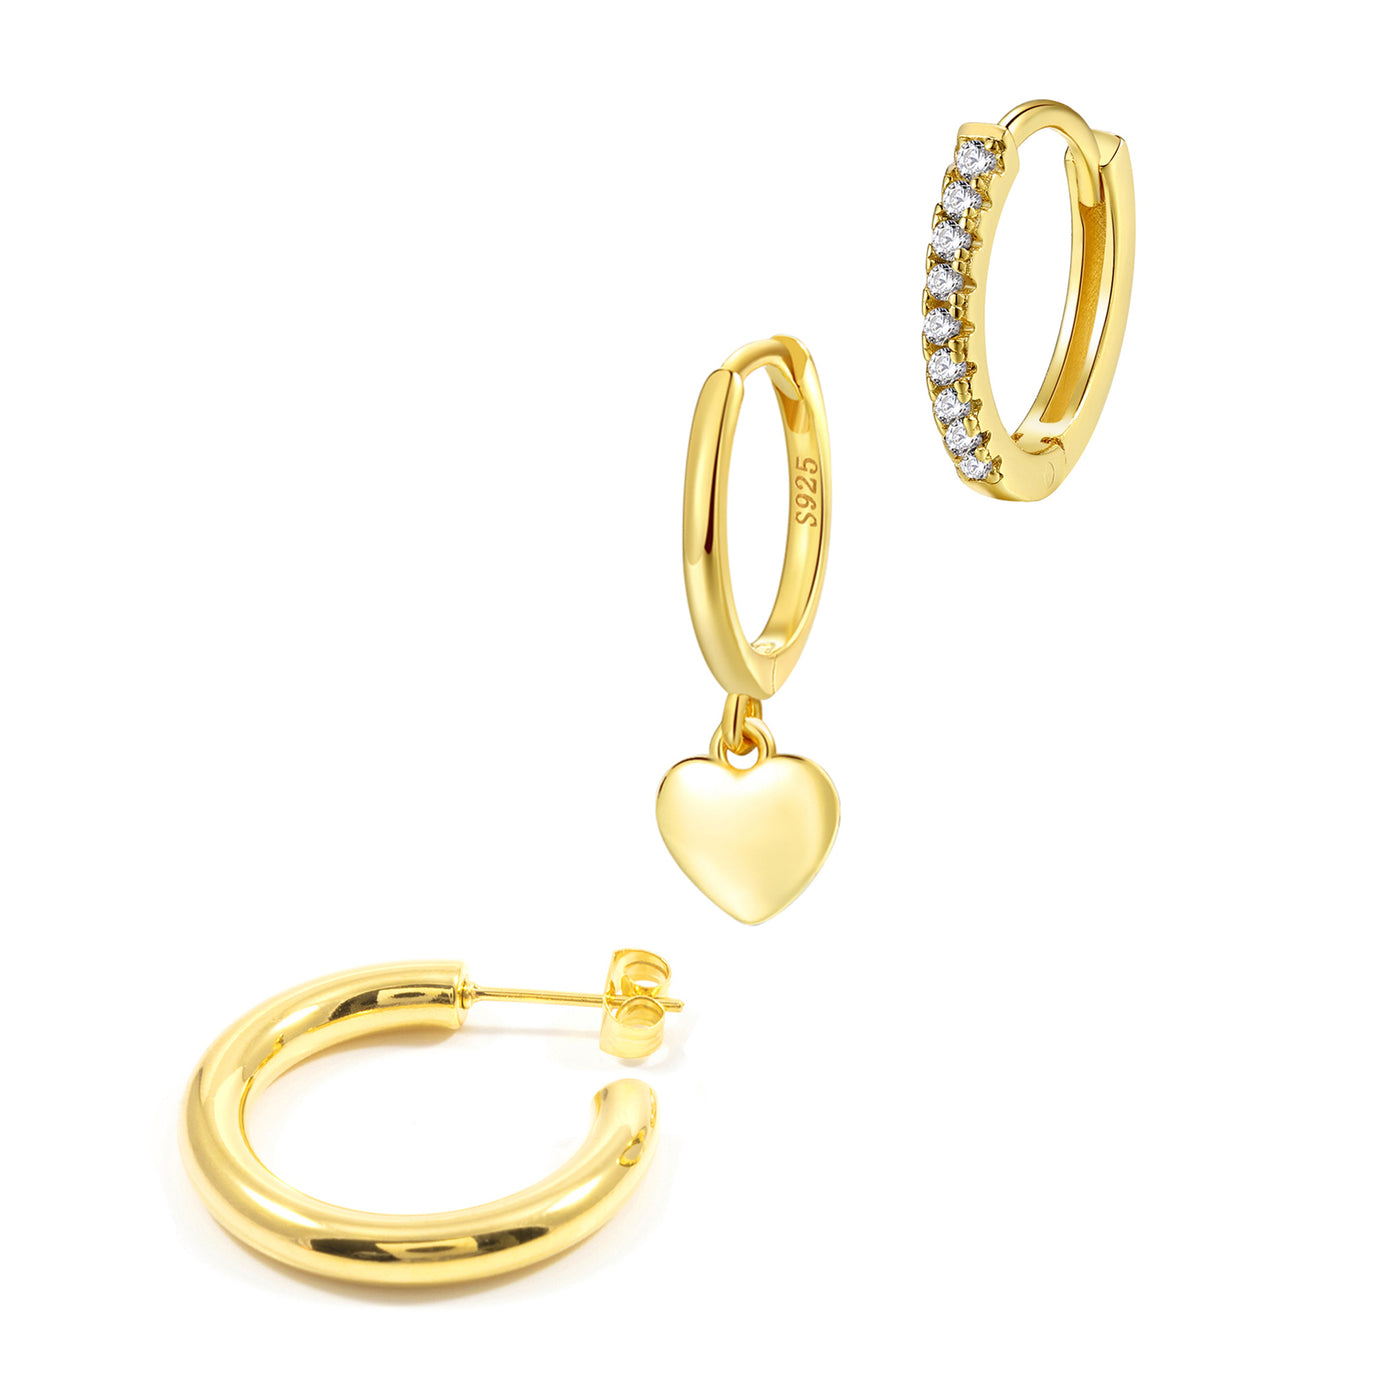 Single Hoop Earrings Set Gold Plated Stacking Jewellery